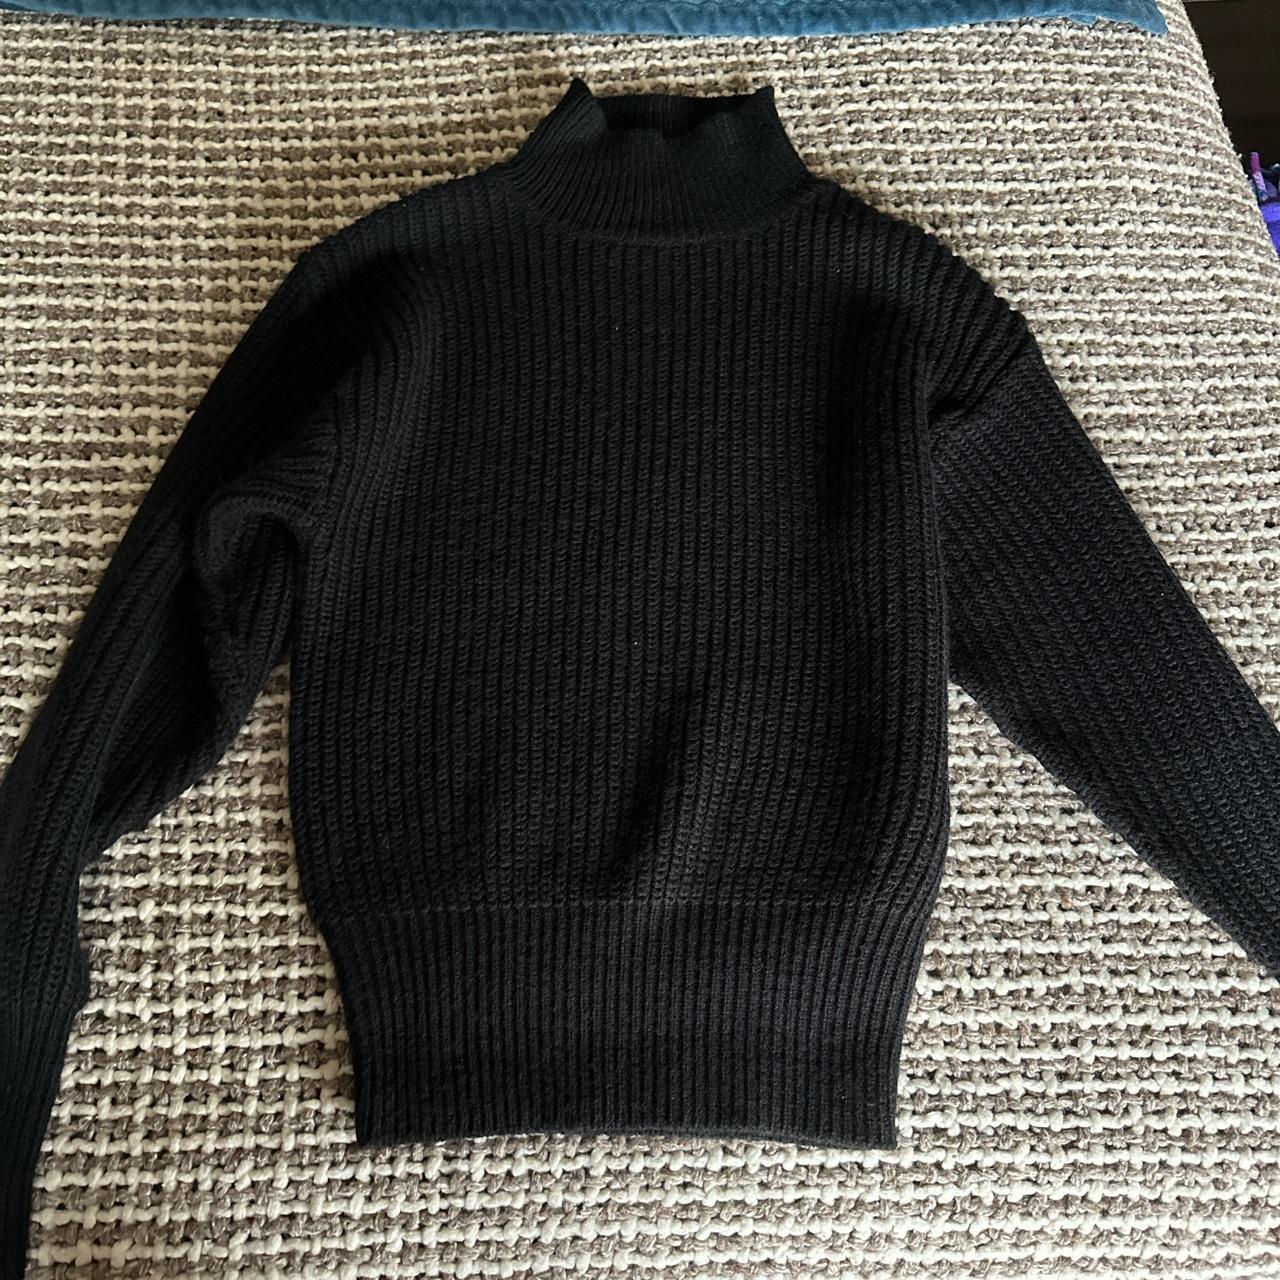 Black Turtleneck Knit Sweater In perfect... - Depop